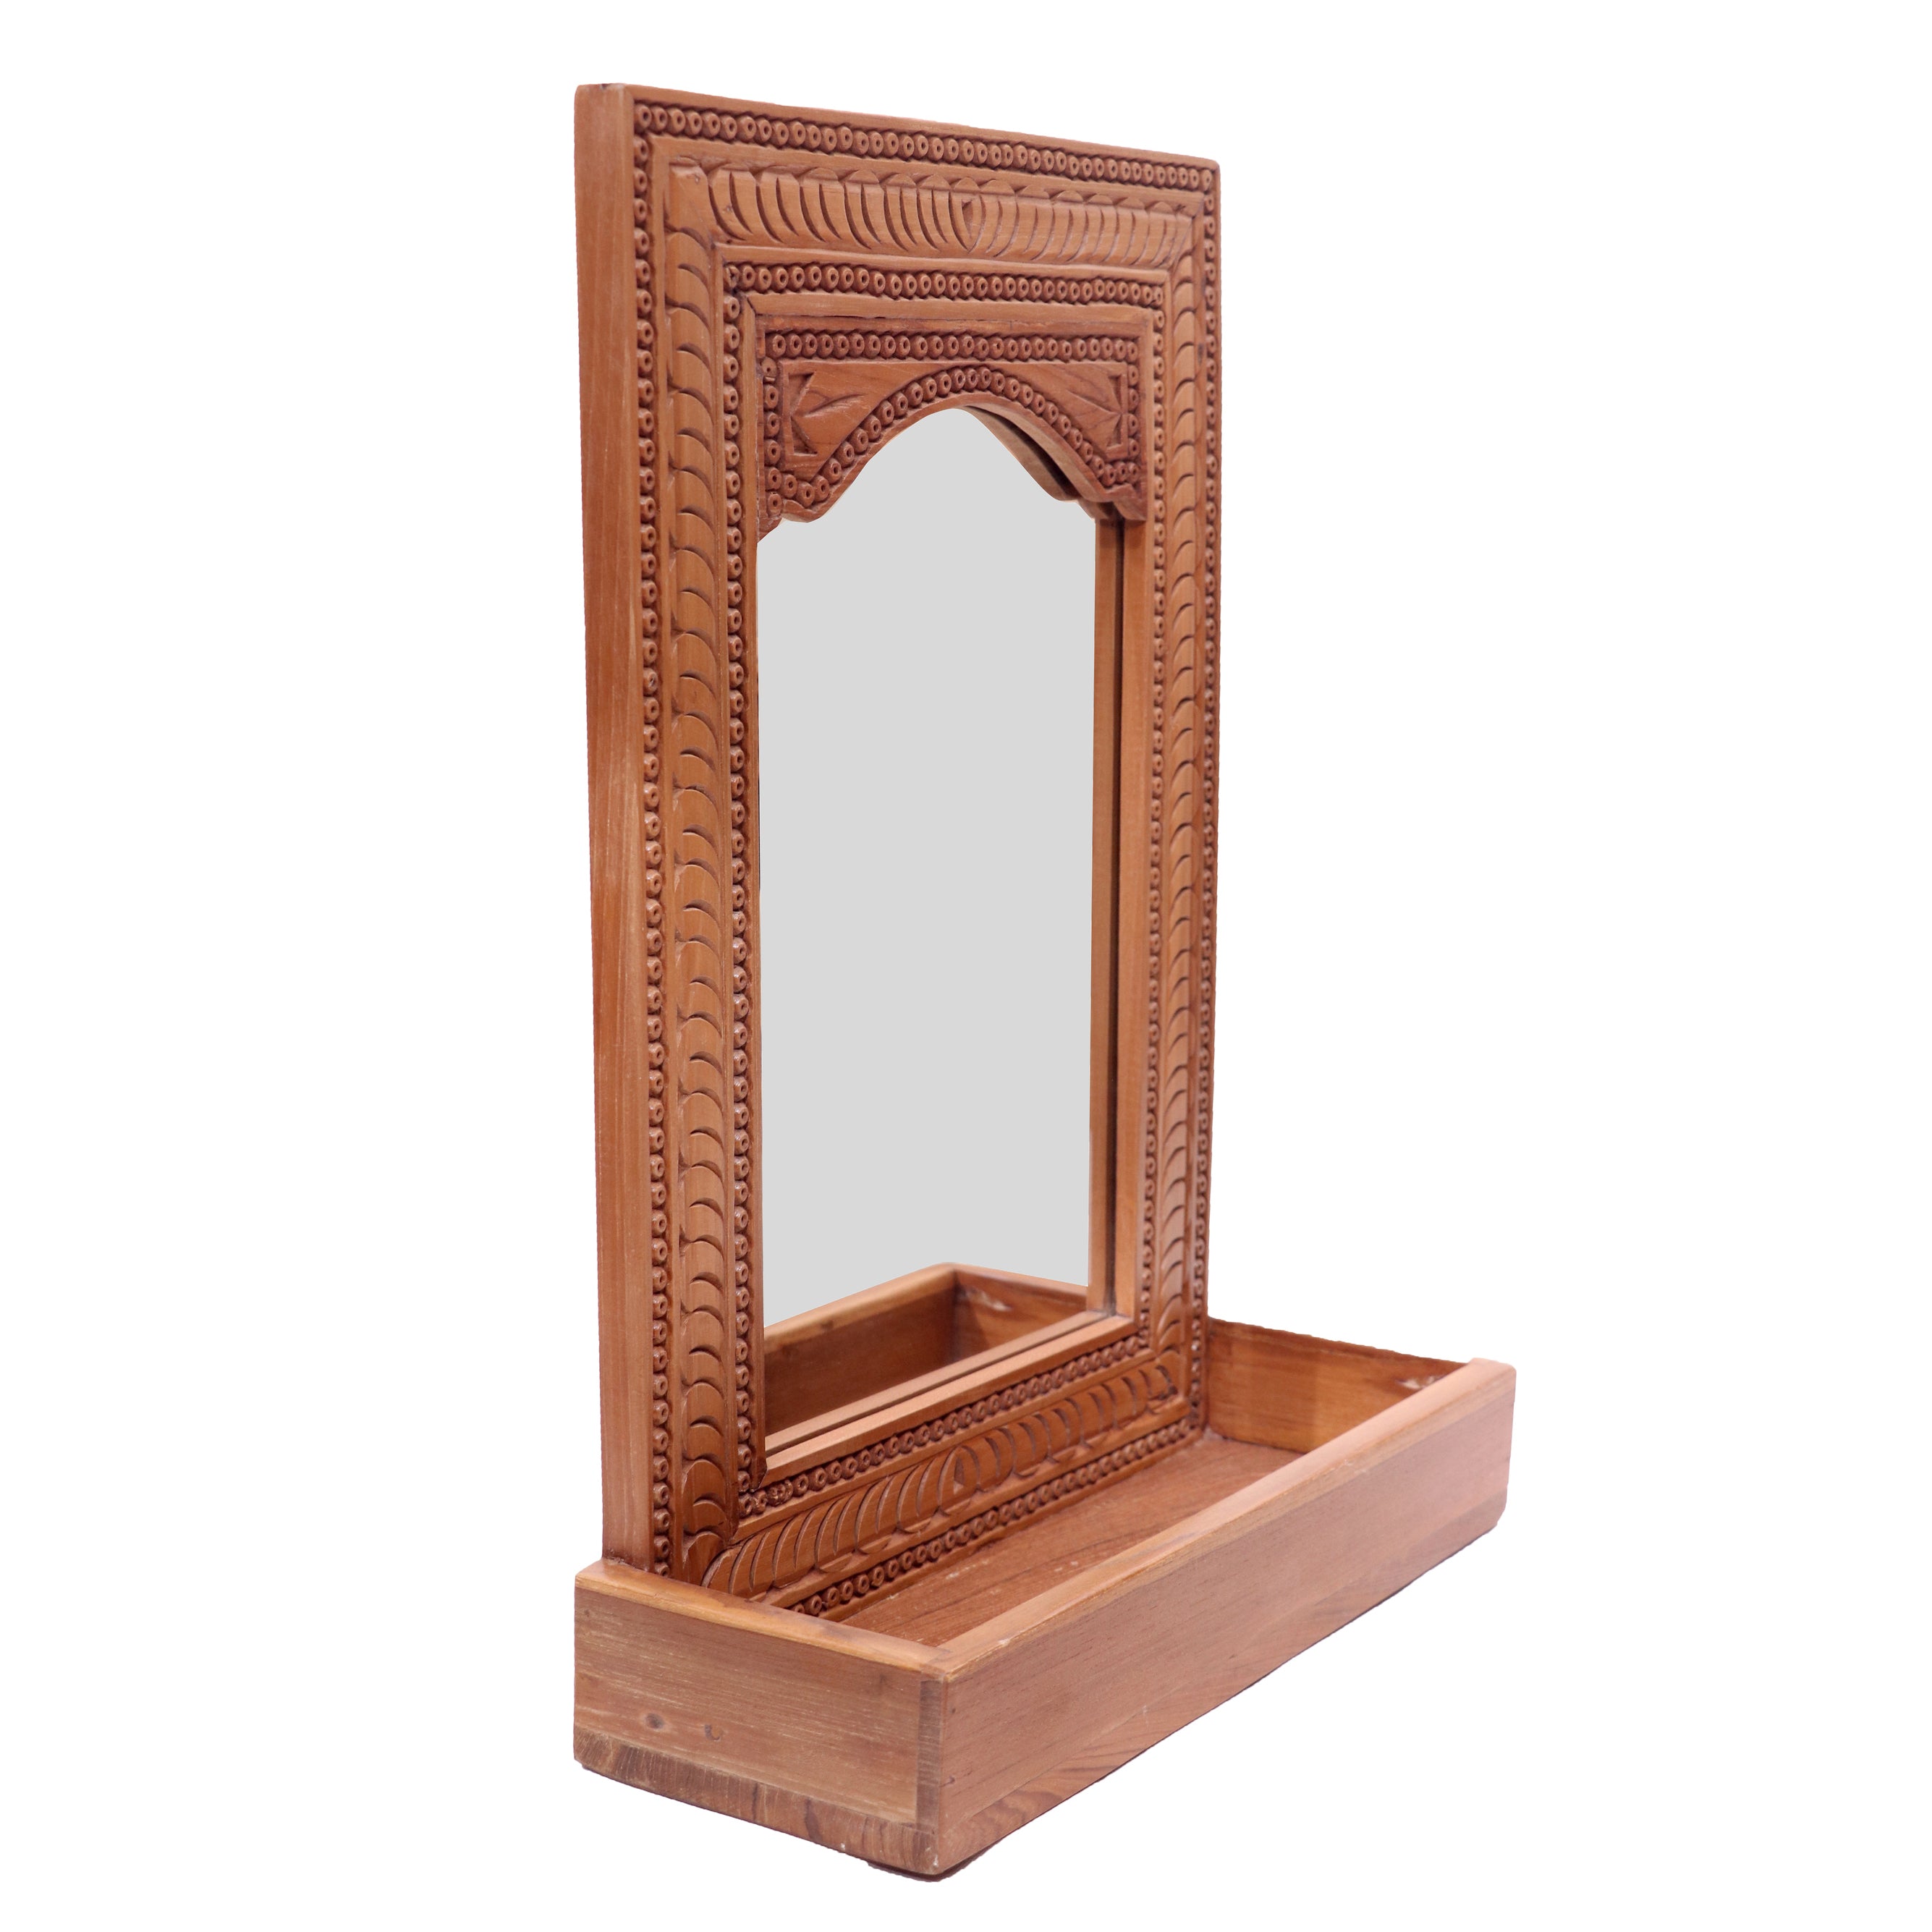 Traditional folk Concept with shelf Mirror Mirror